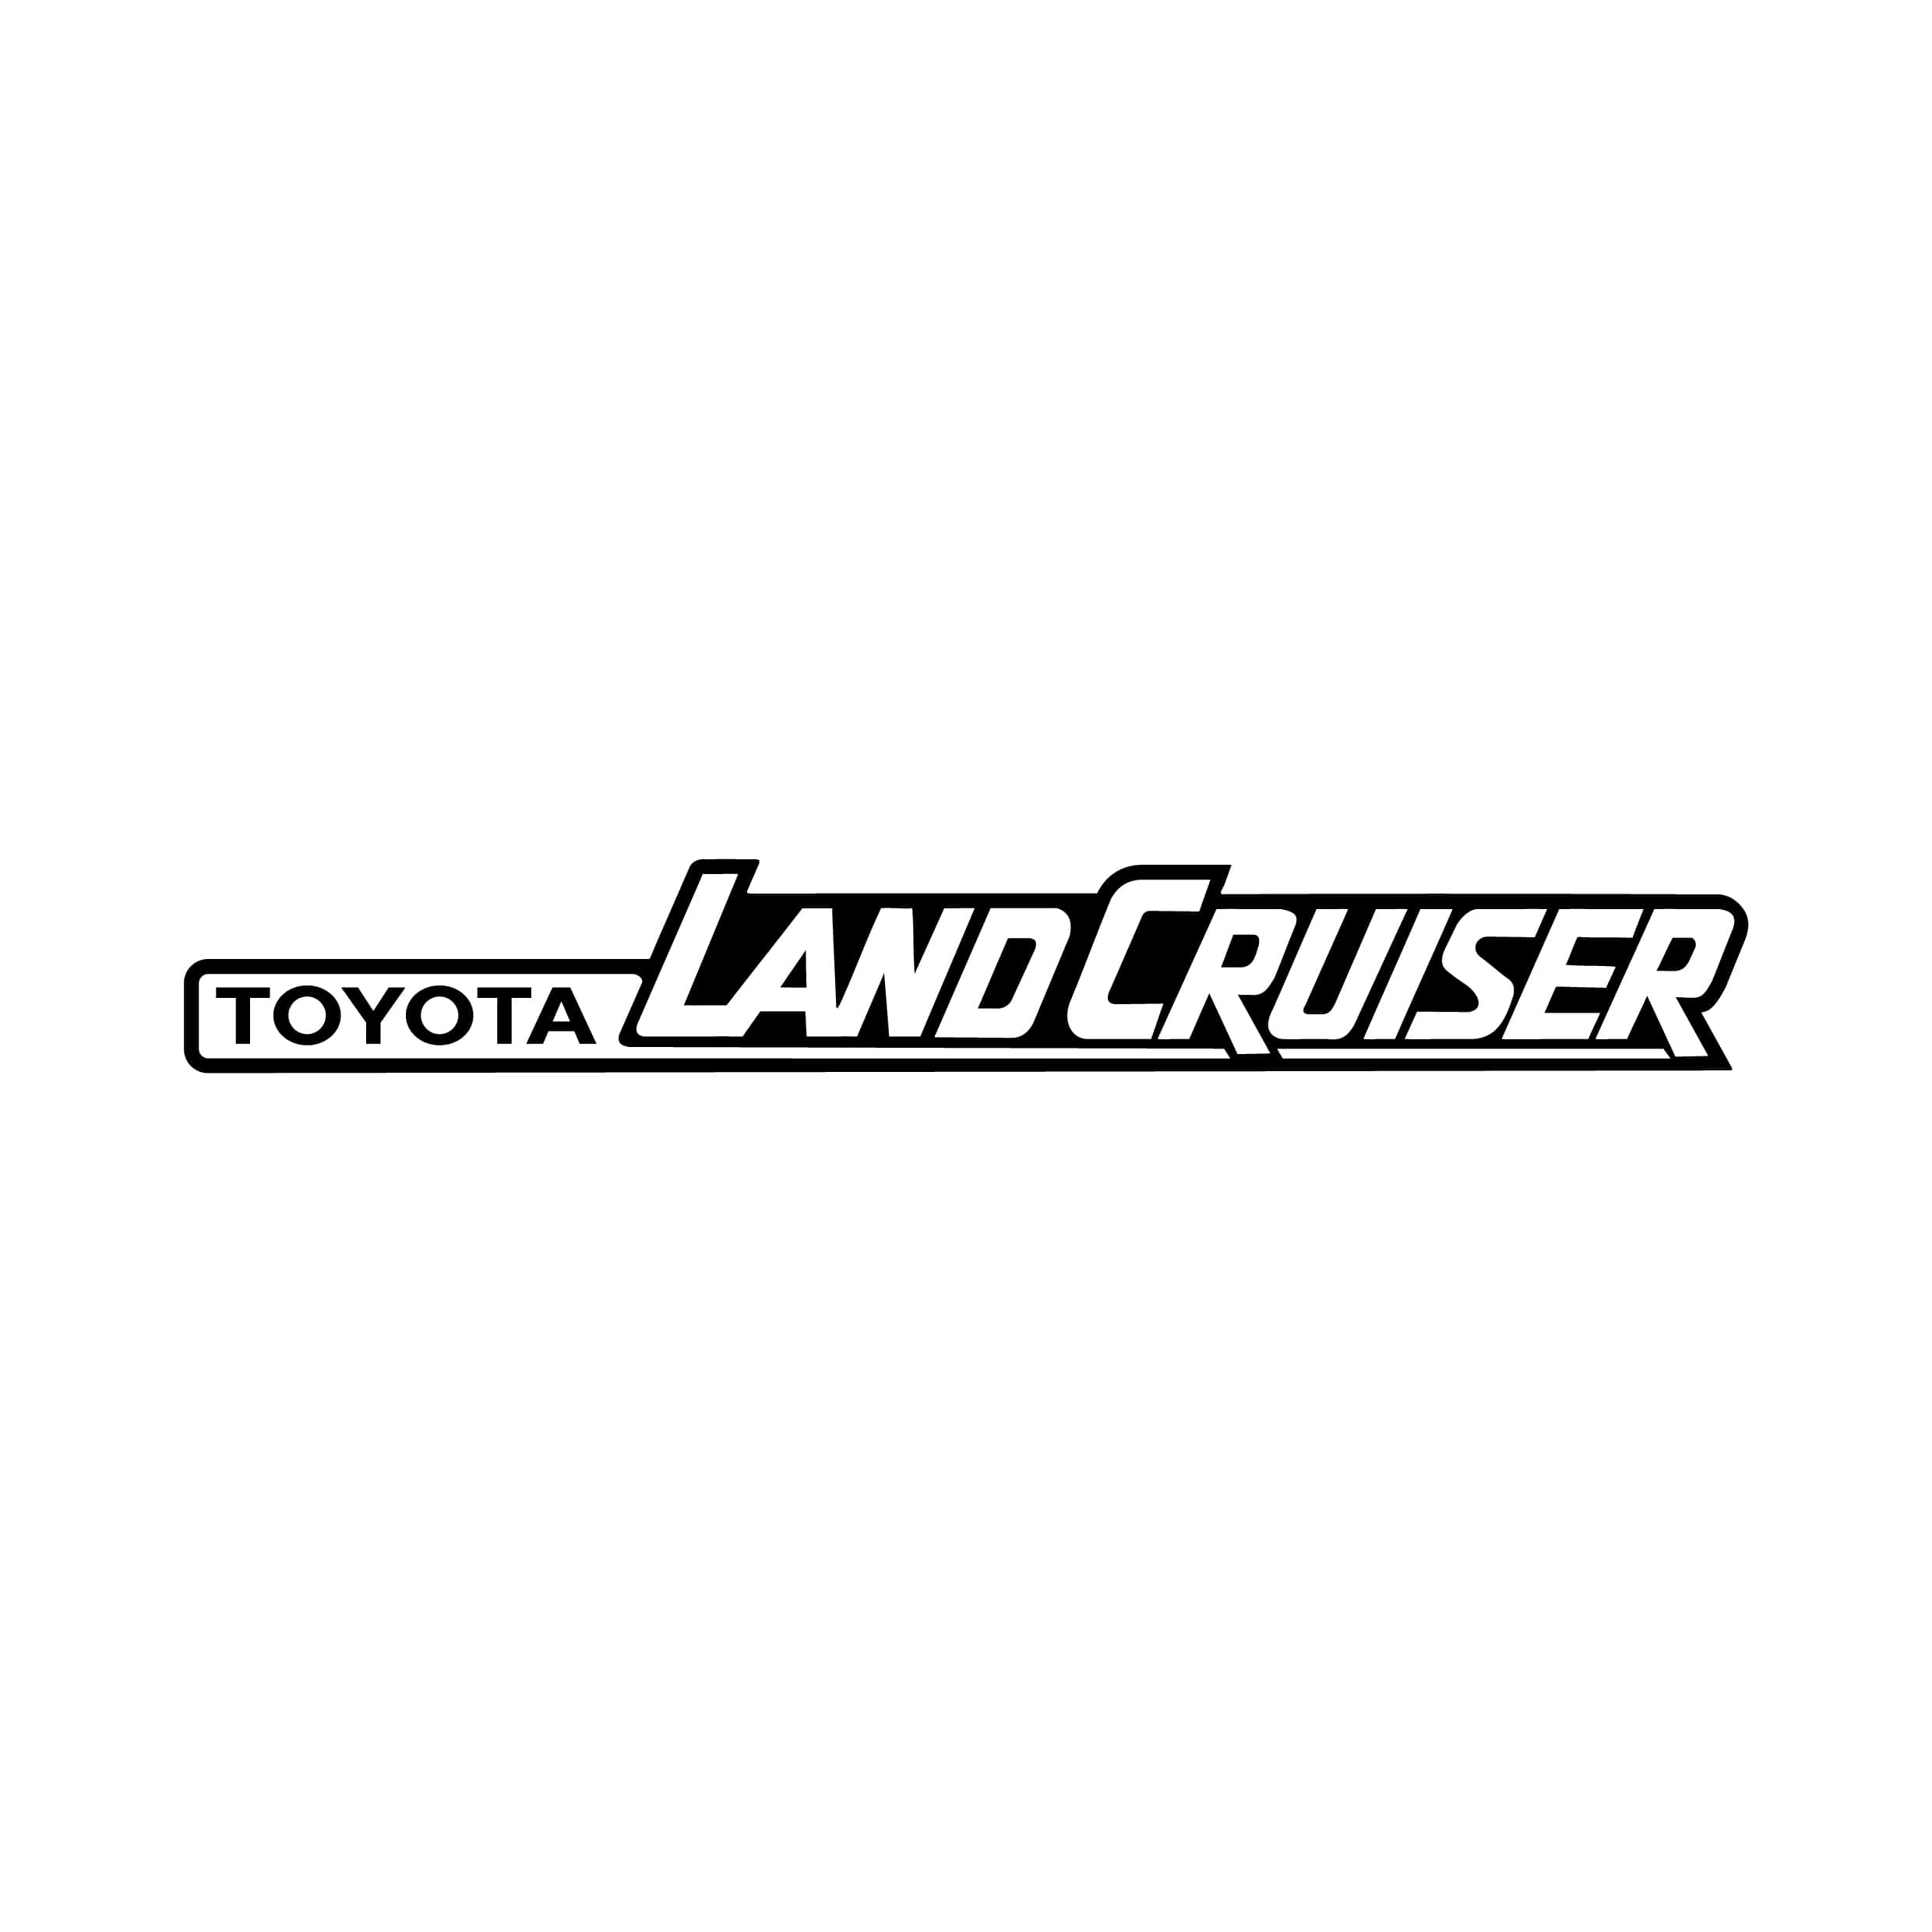 stickers-toyota-land-cruiser-ref9-autocollant-4x4-sticker-suv-off-road-autocollants-decals-sponsors-tuning-rallye-voiture-logo-min